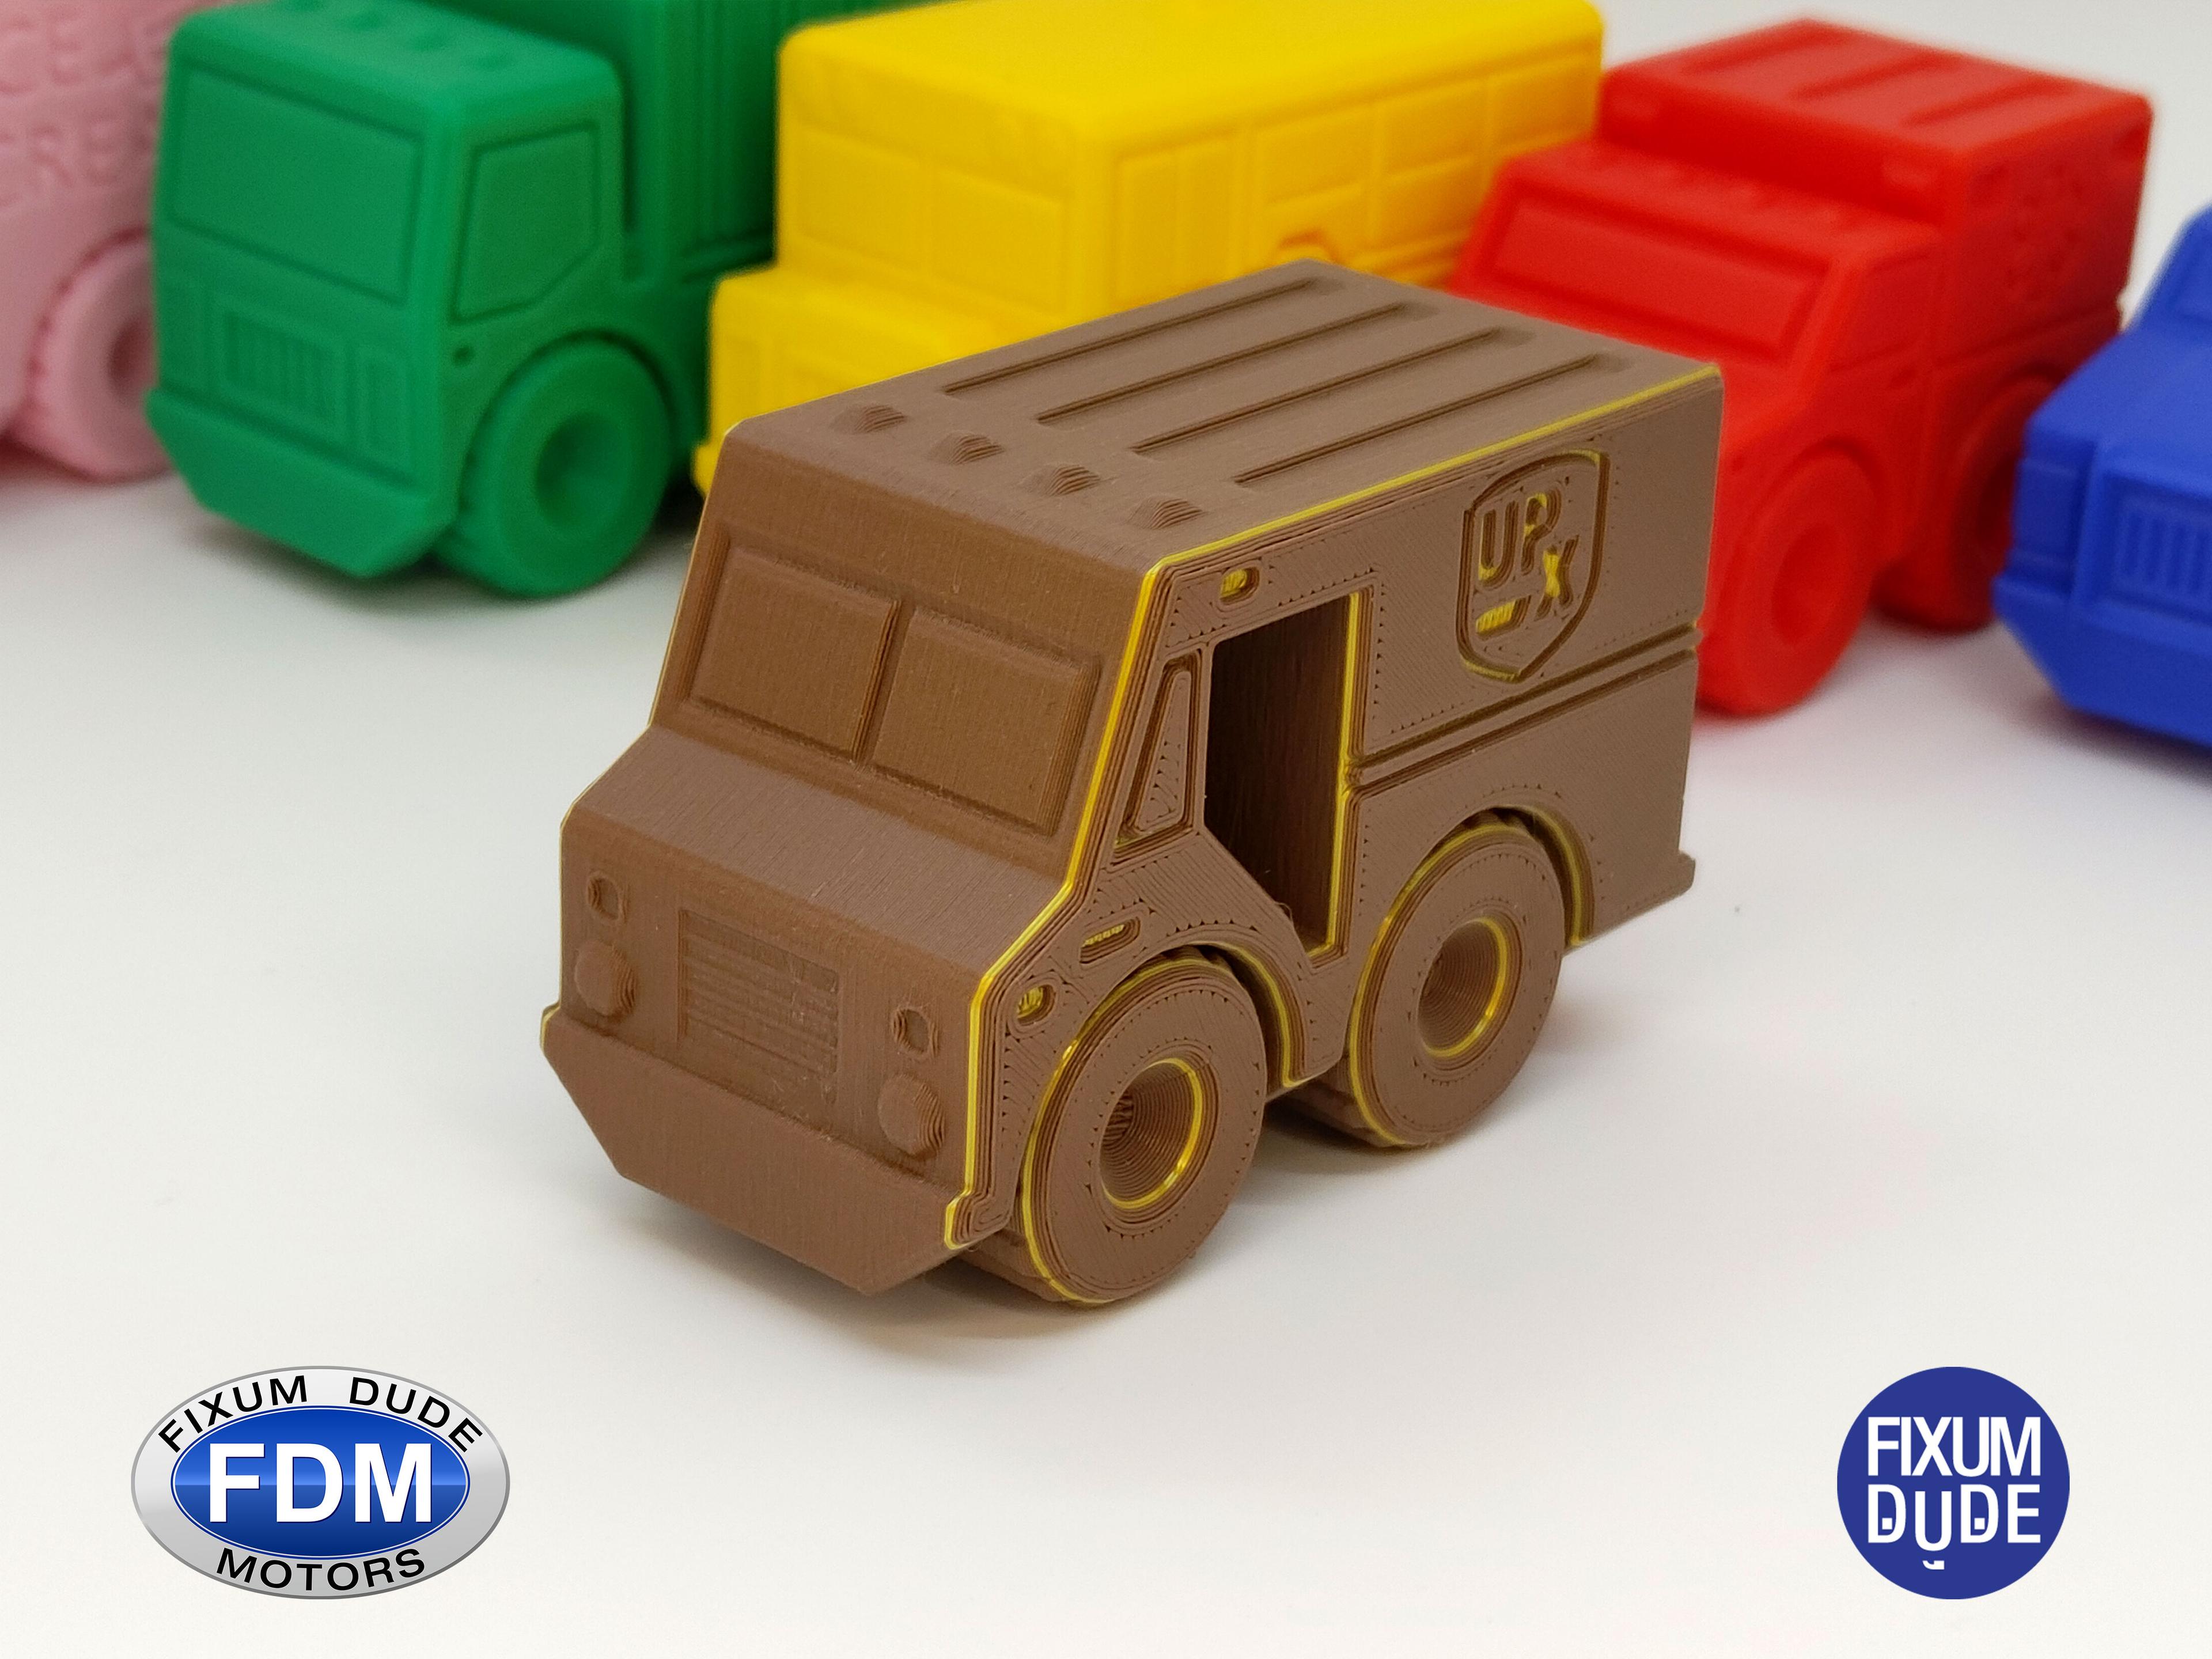 Fixum Dude Motors PIP Package Delivery Truck  3d model